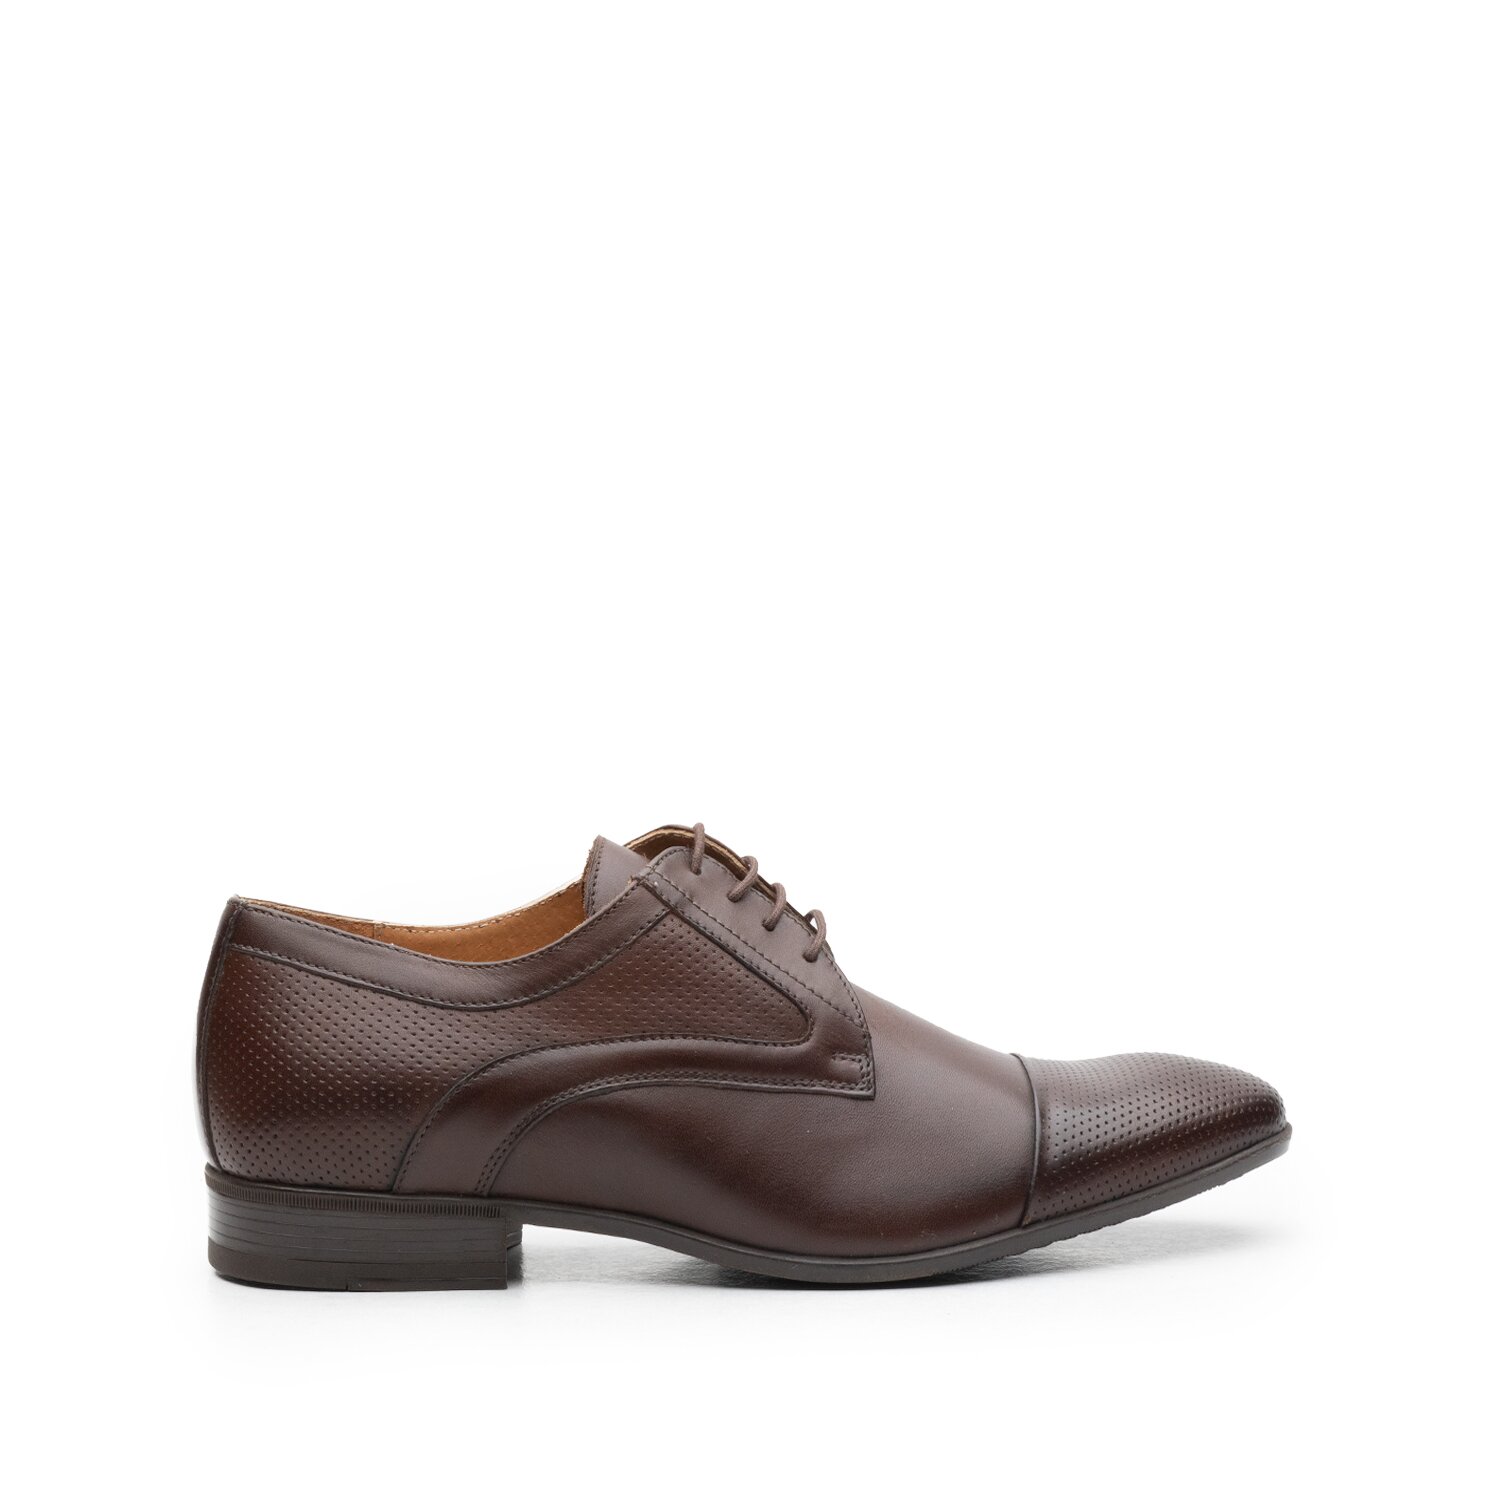 Pantofi eleganti barbati din piele naturala, Leofex - 113 maro box